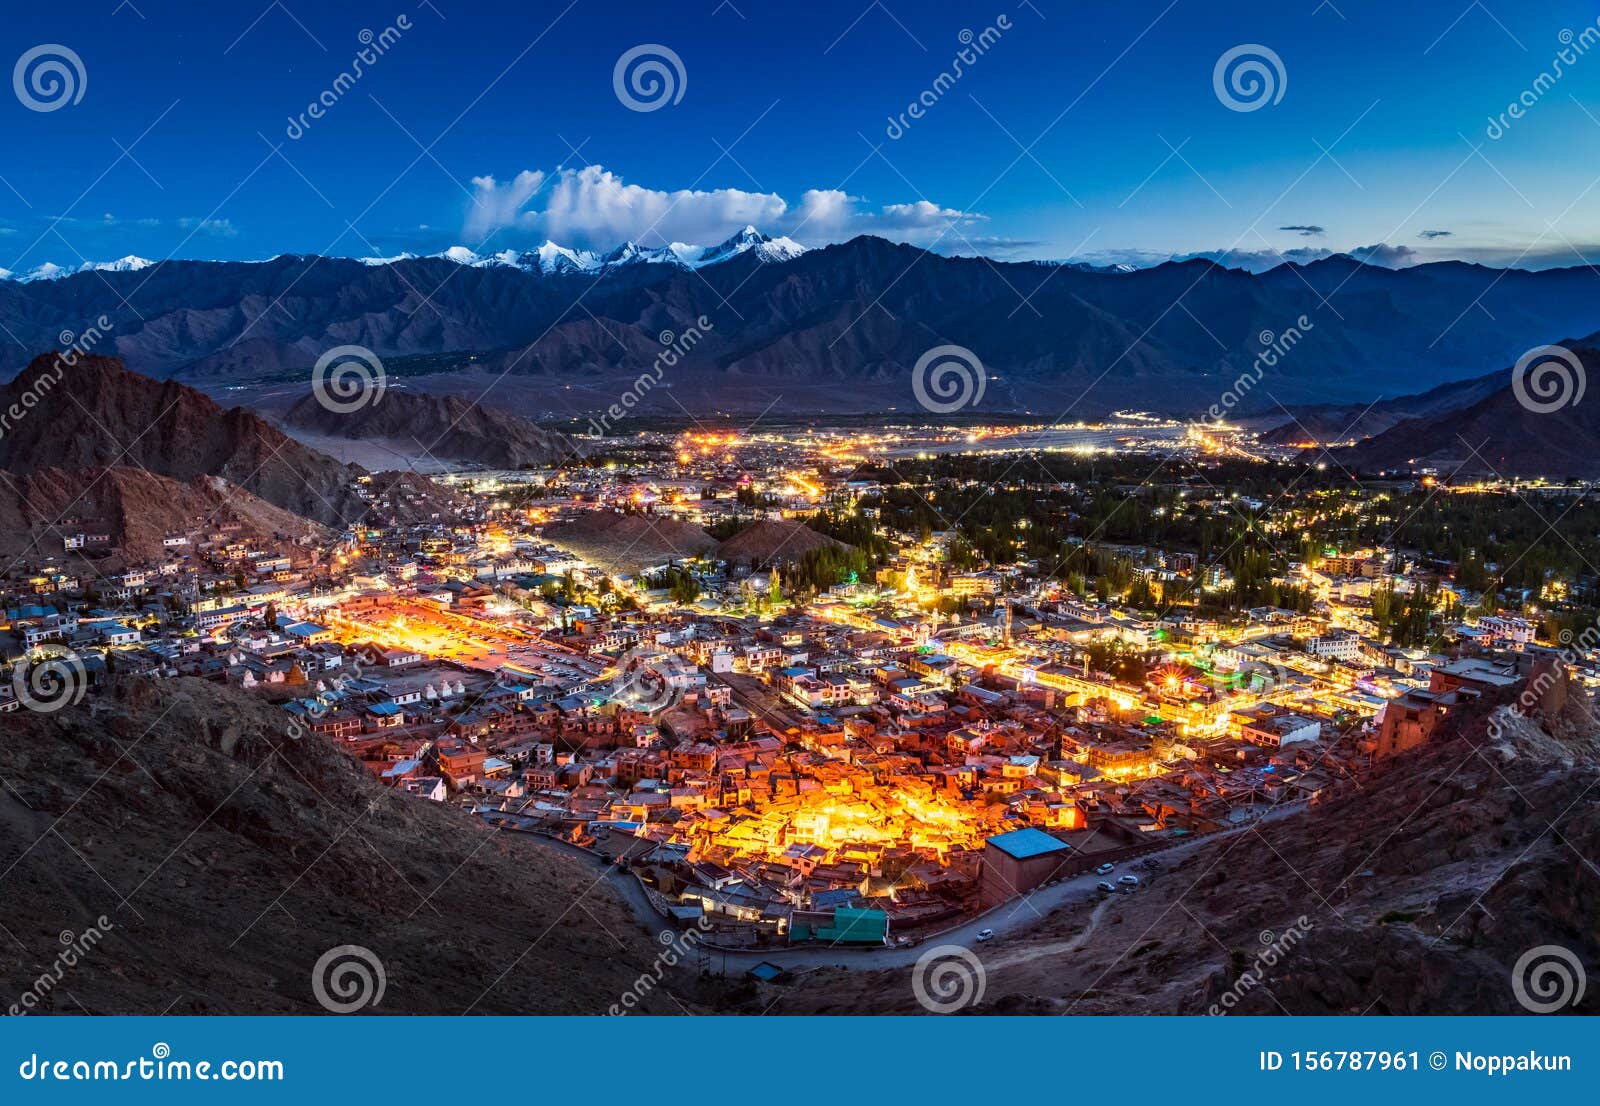 aerial view of leh city at night, ladakh, india